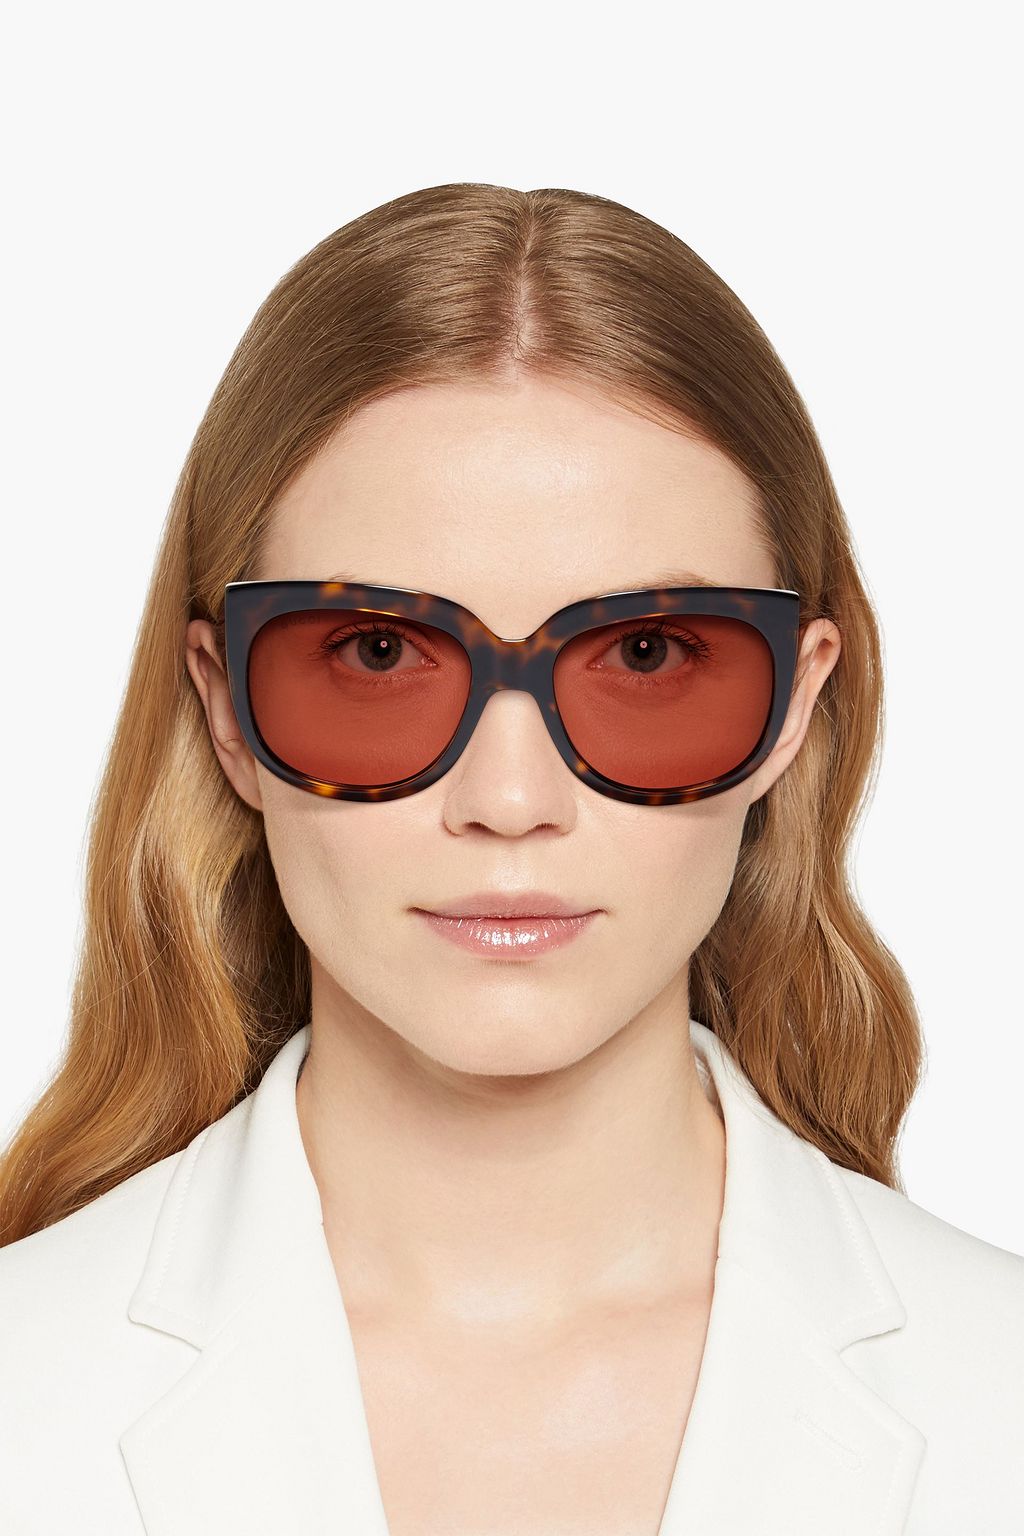 GUCCI
D-frame tortoiseshell acetate sunglasses